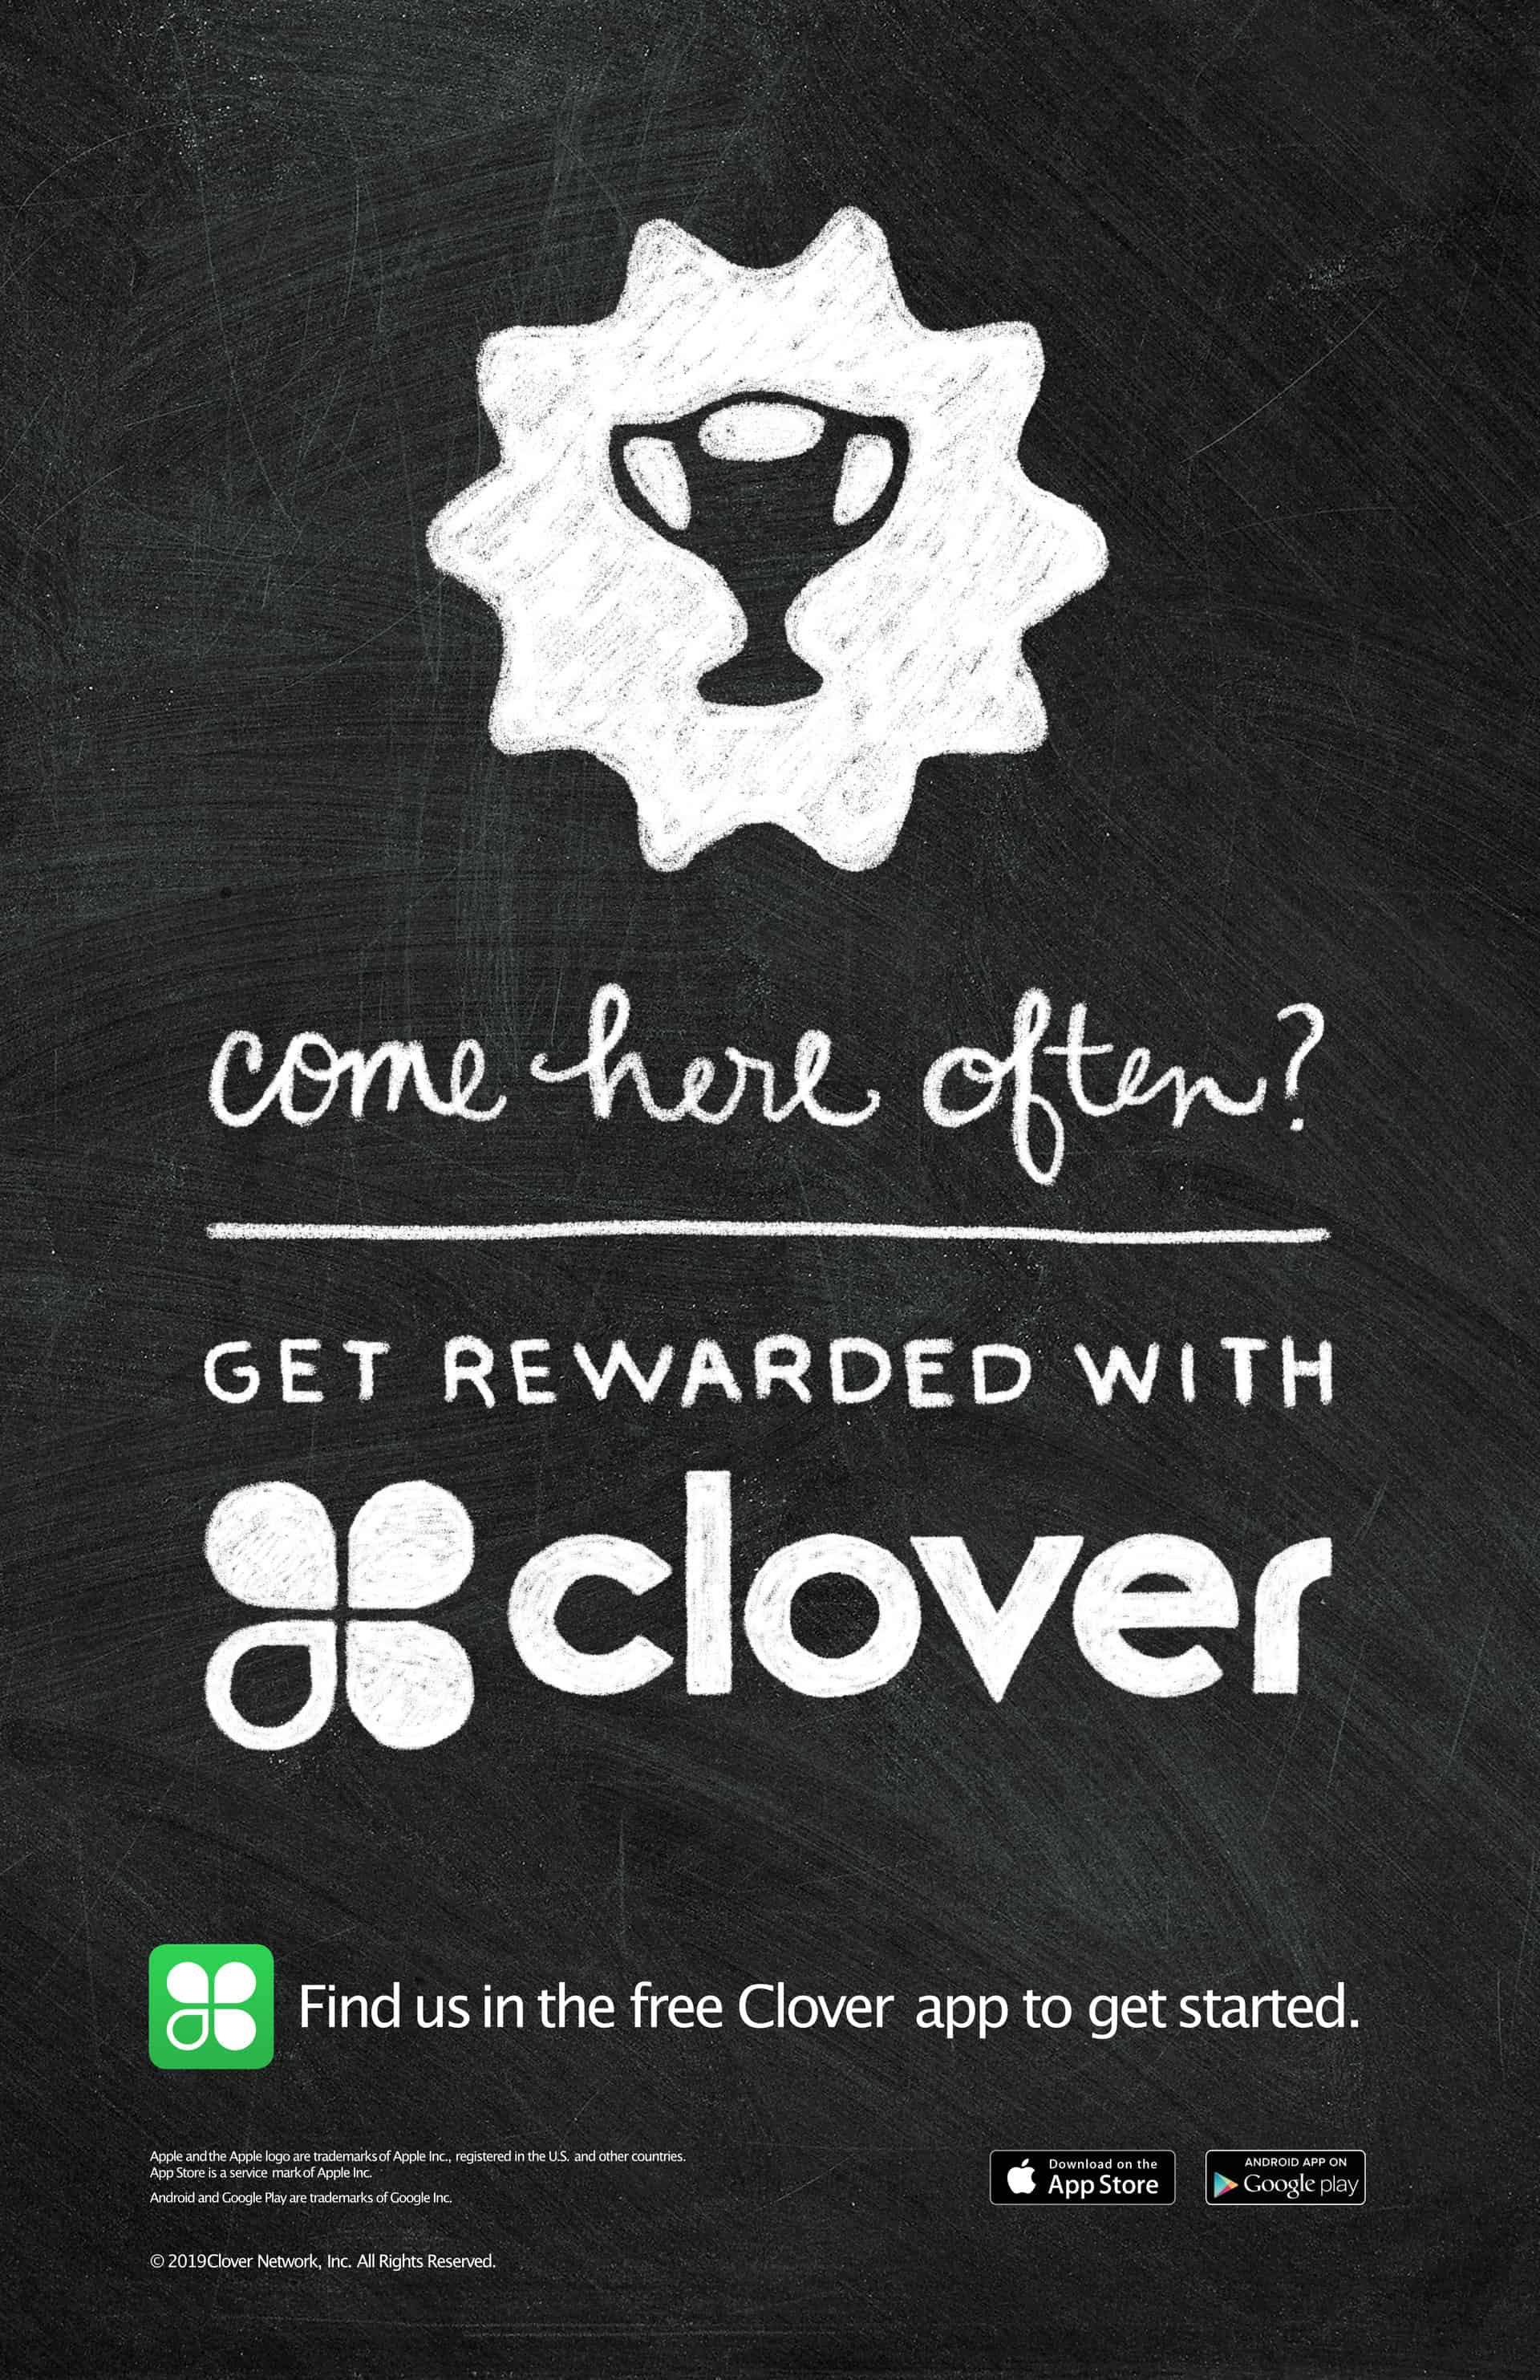 Hot Dog Avenue offers loyalty rewards through Clover